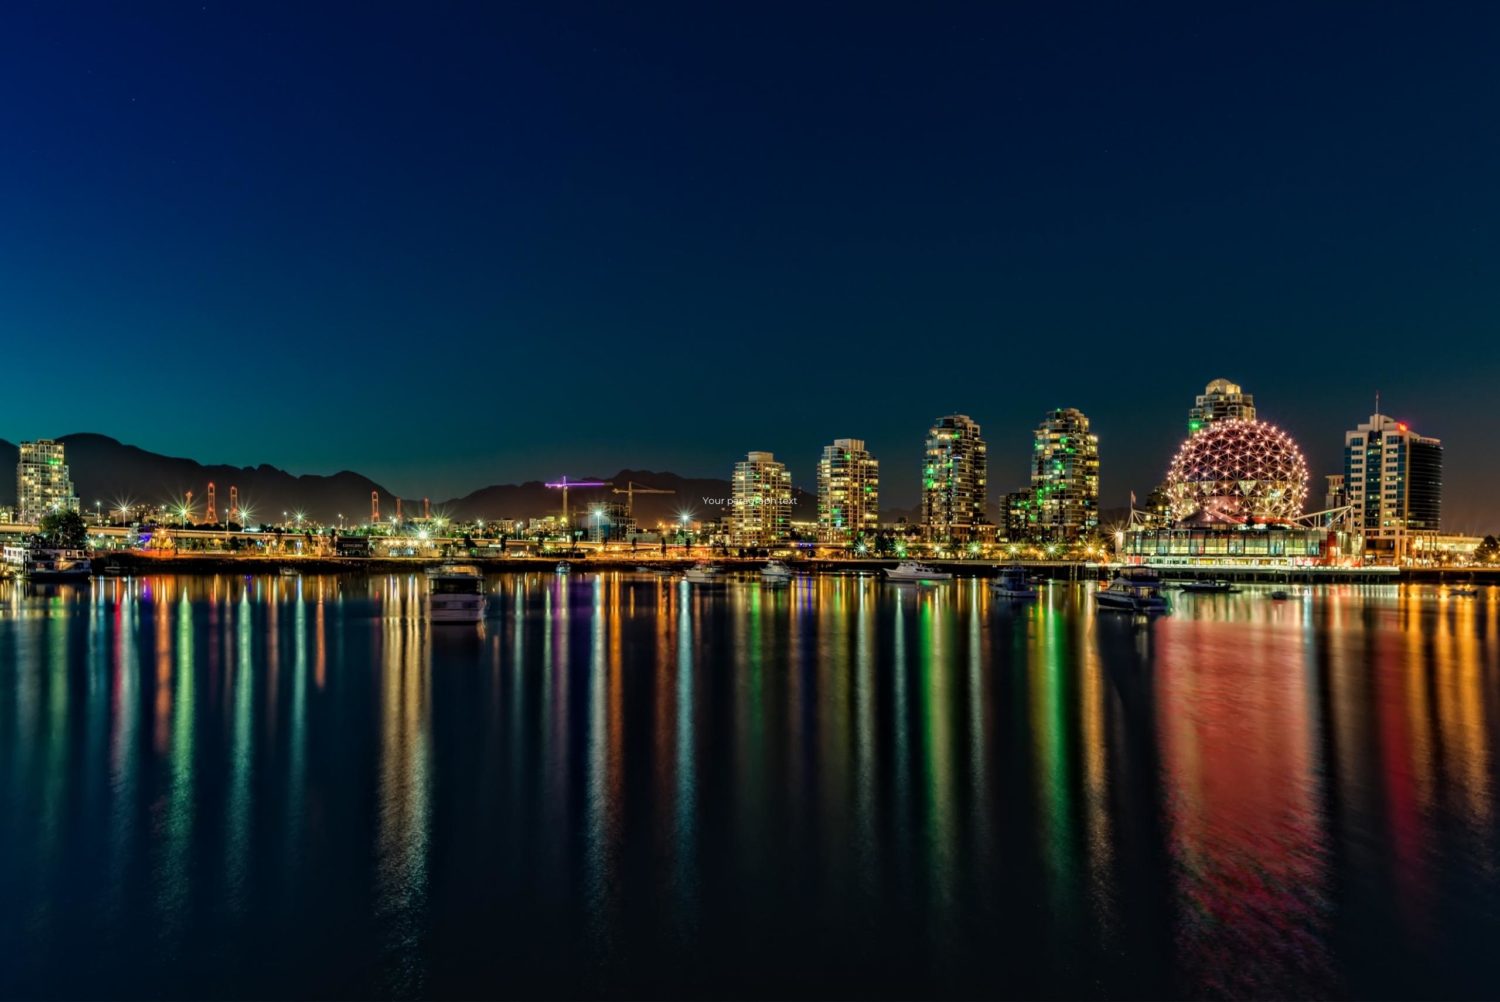 View at Night in British Columbia